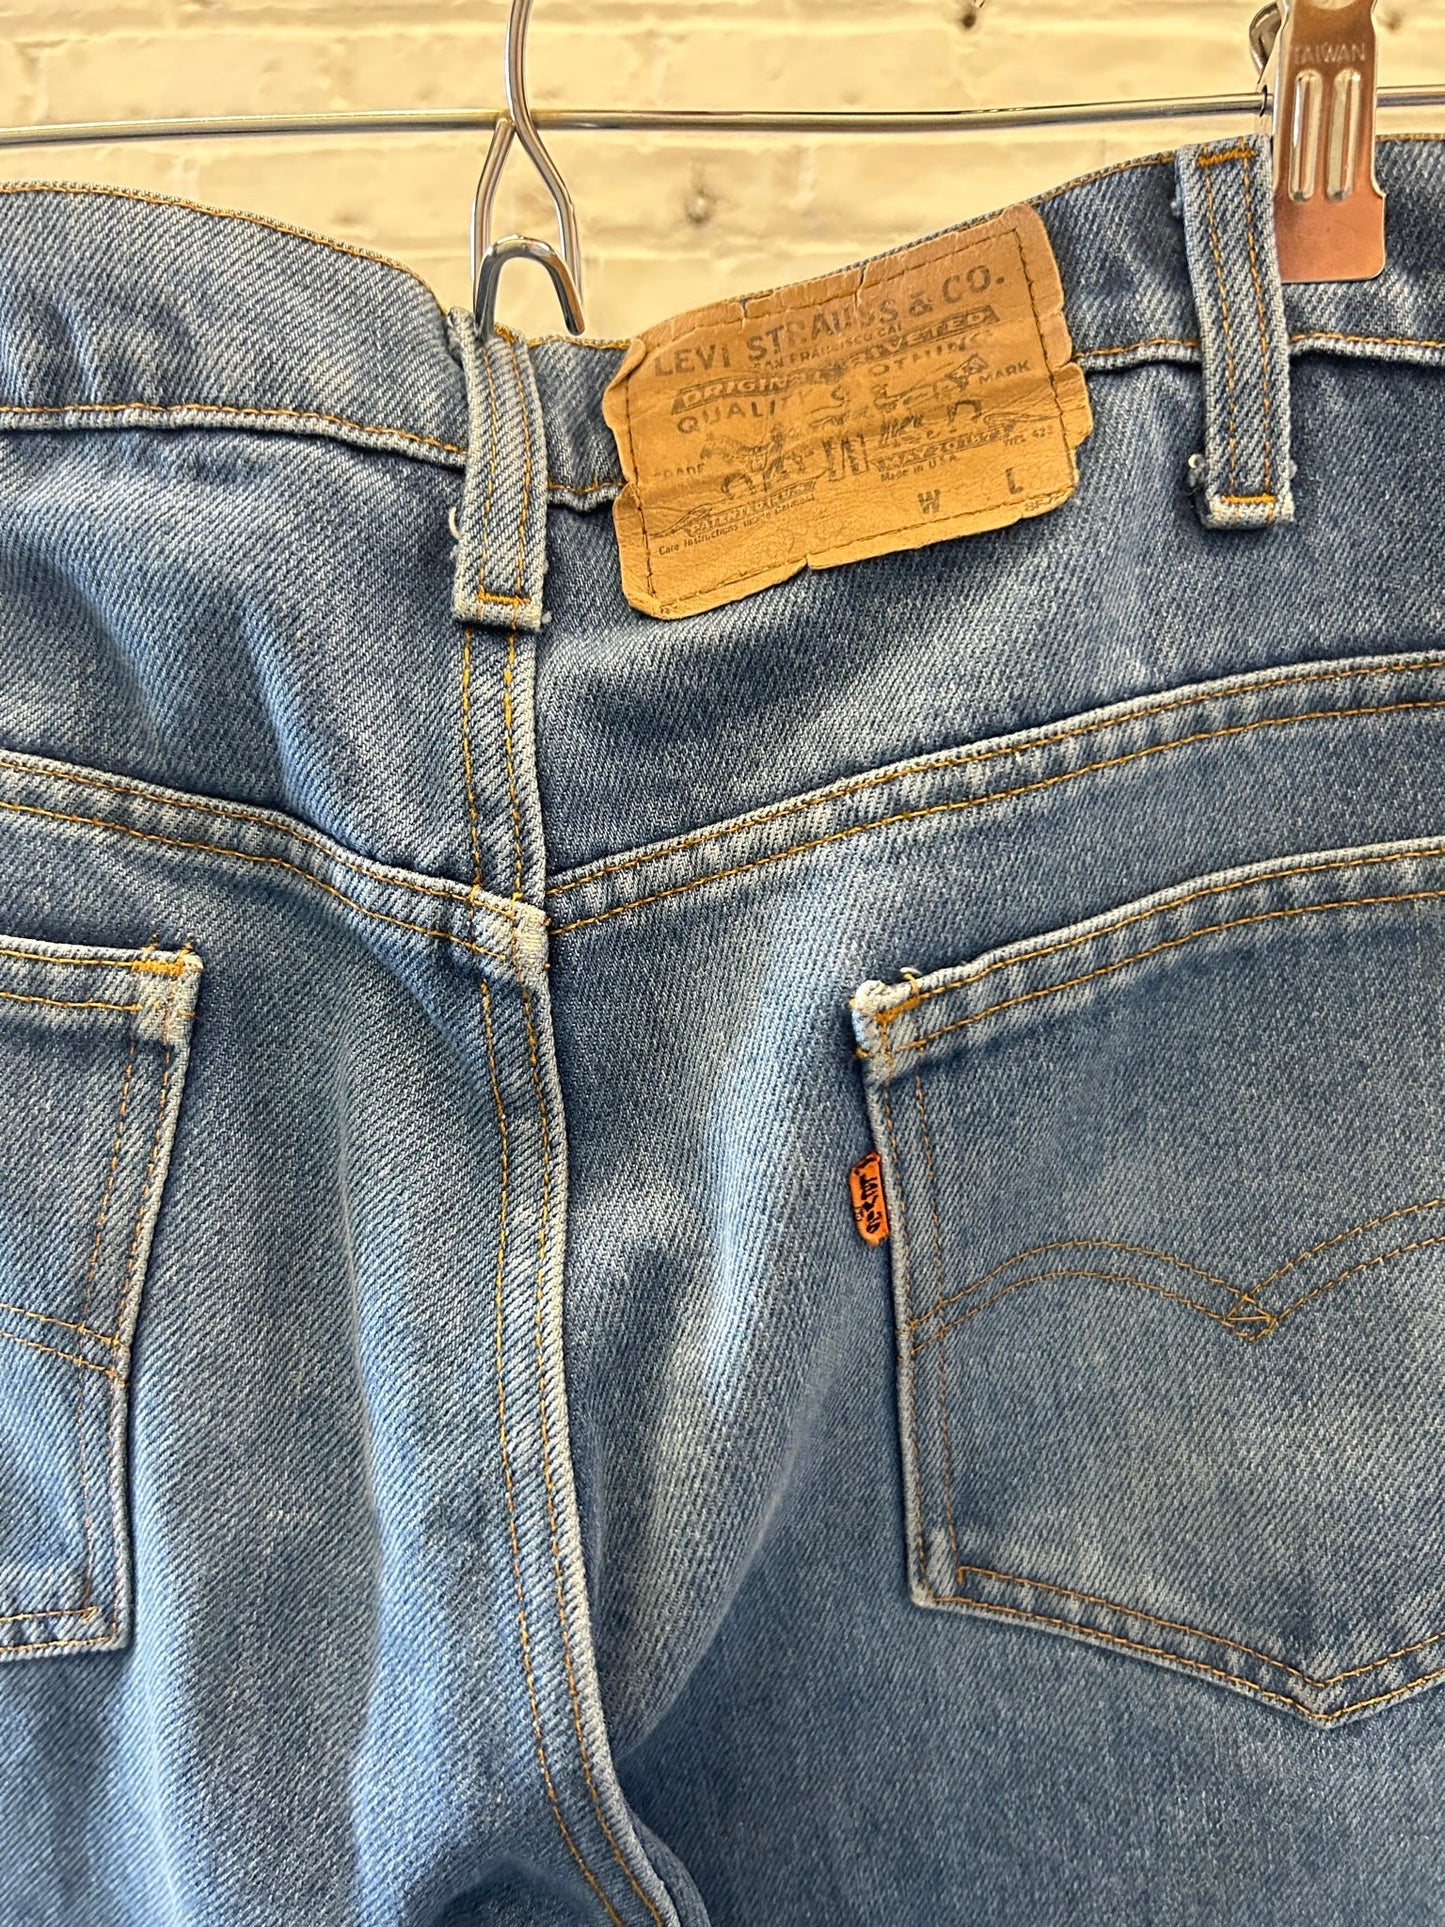 Levi's Orange Tab Jeans